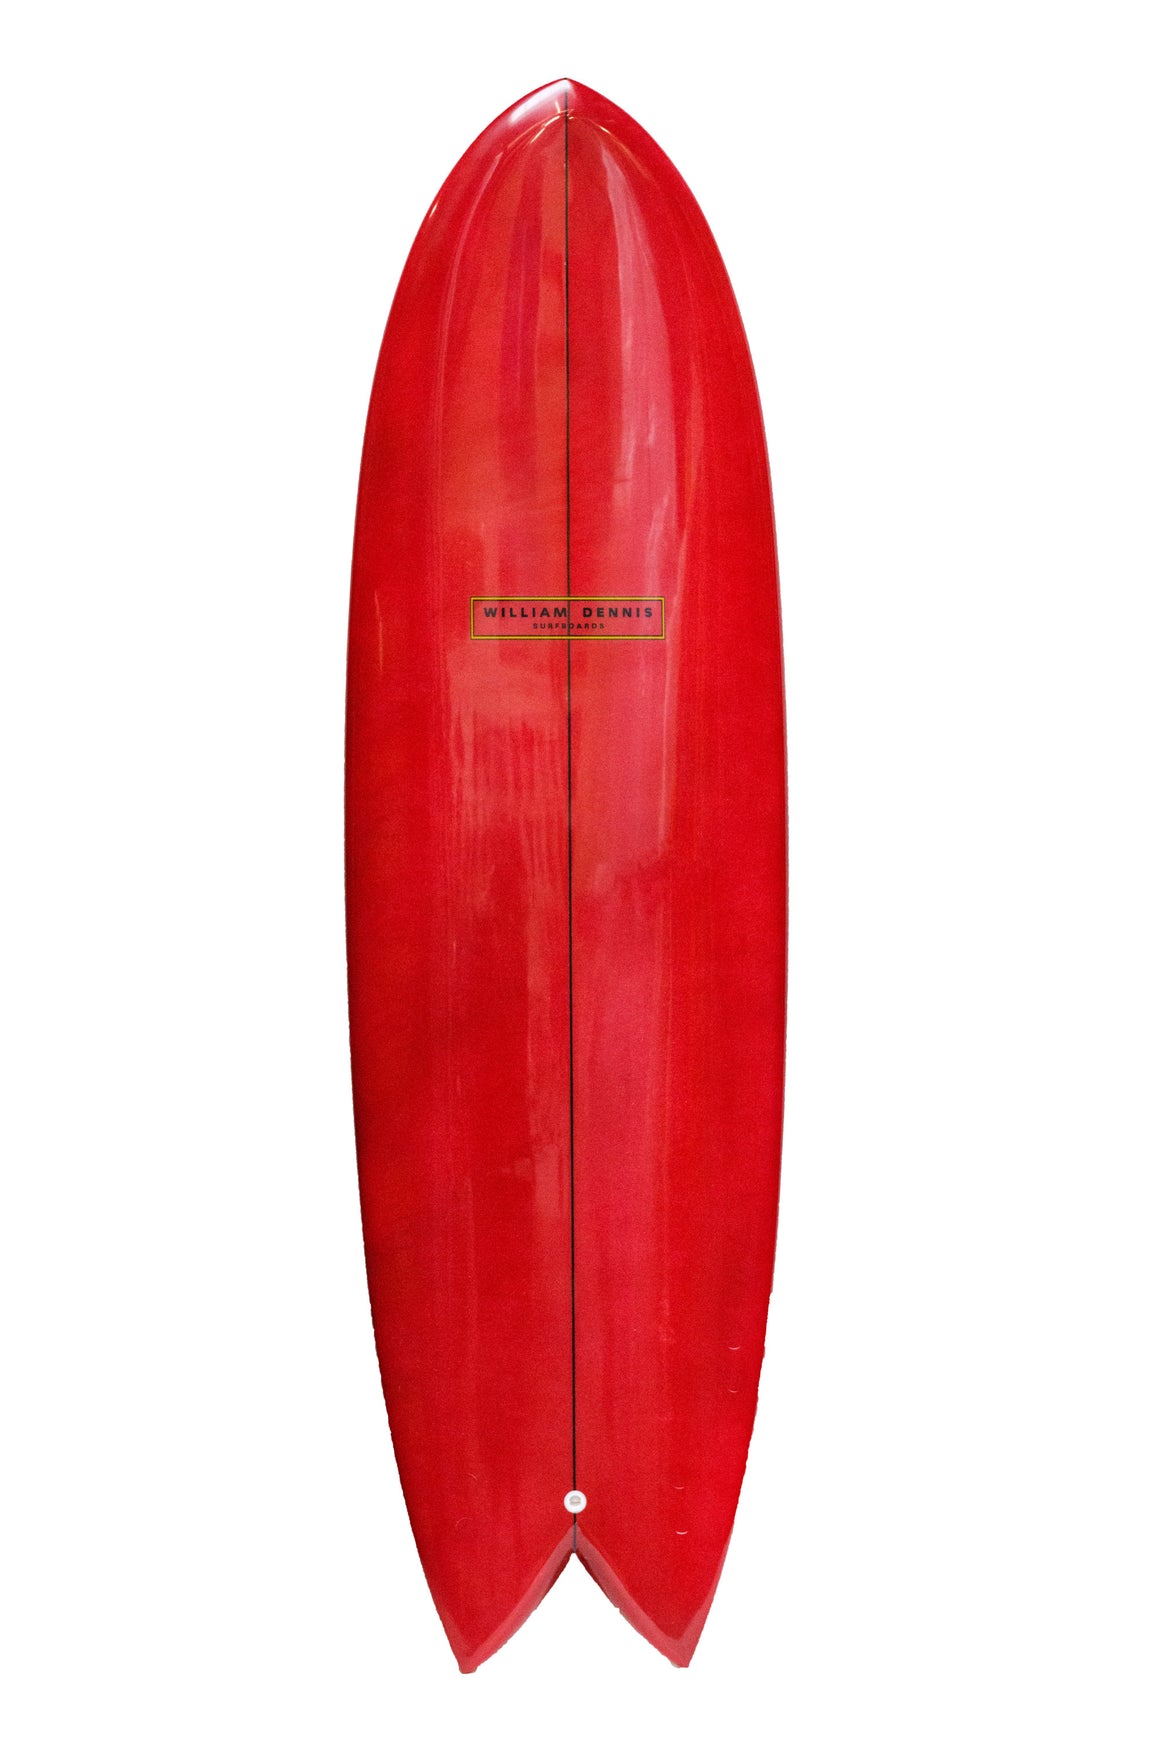 William Dennis Custom "Mini Mega Swallow Tail" ShortBoard - Ventura Surf Shop